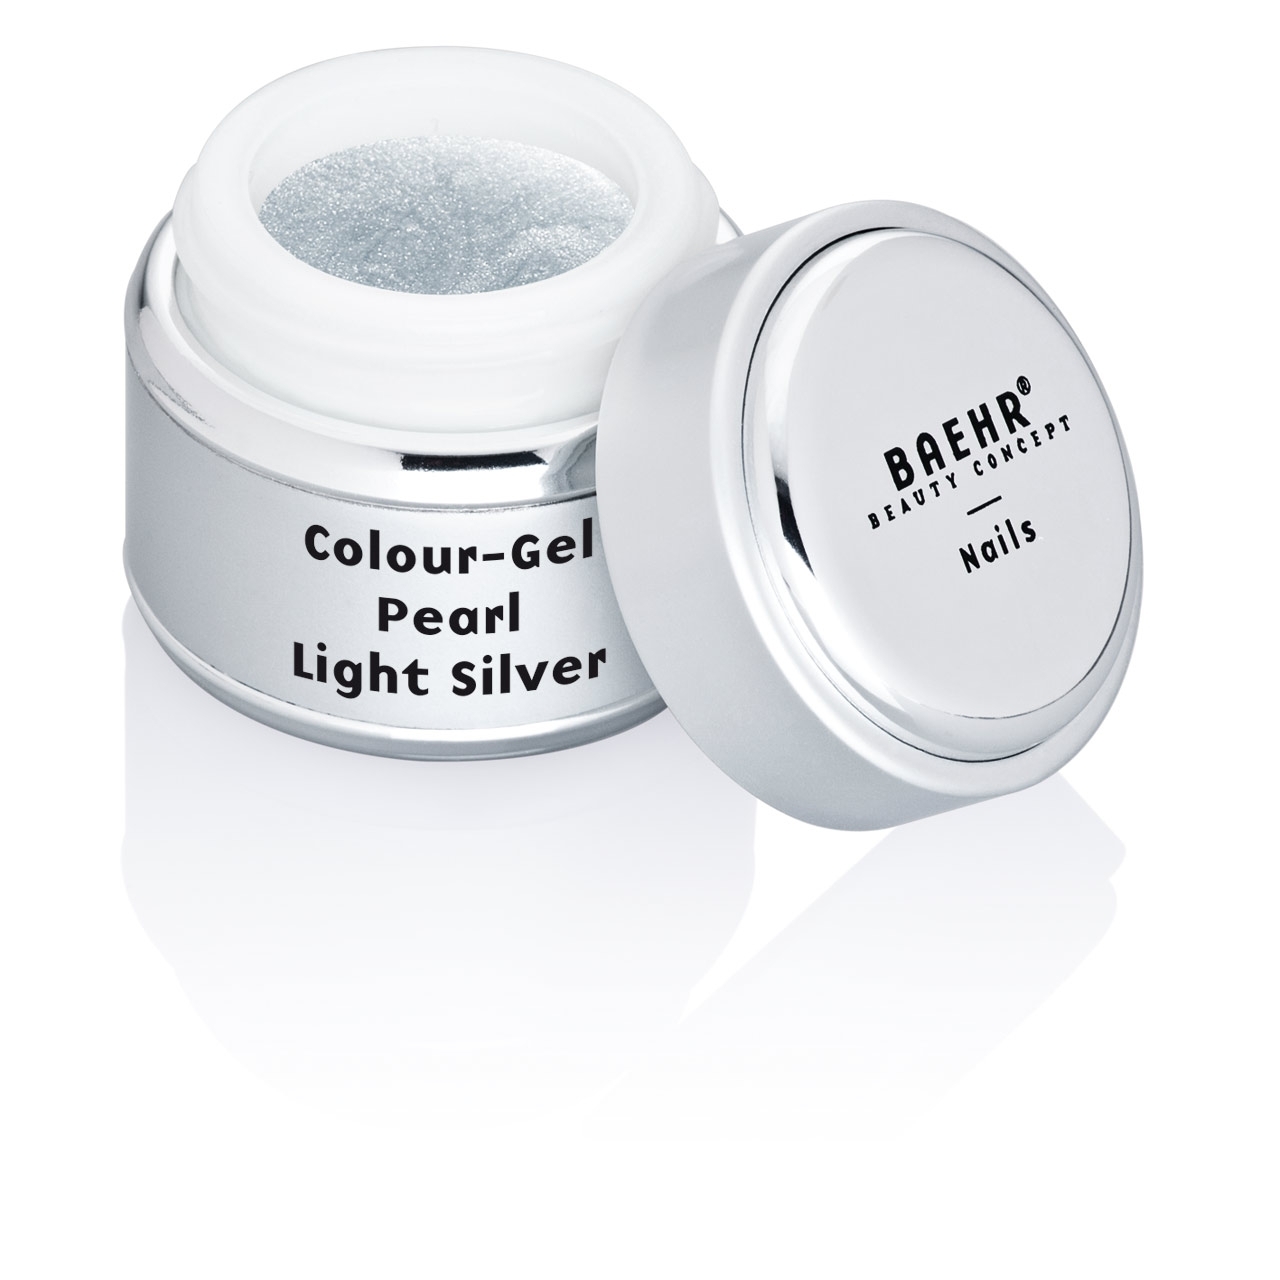 BAEHR BEAUTY CONCEPT - NAILS Colour-Gel Pearl Light Silver 5 ml